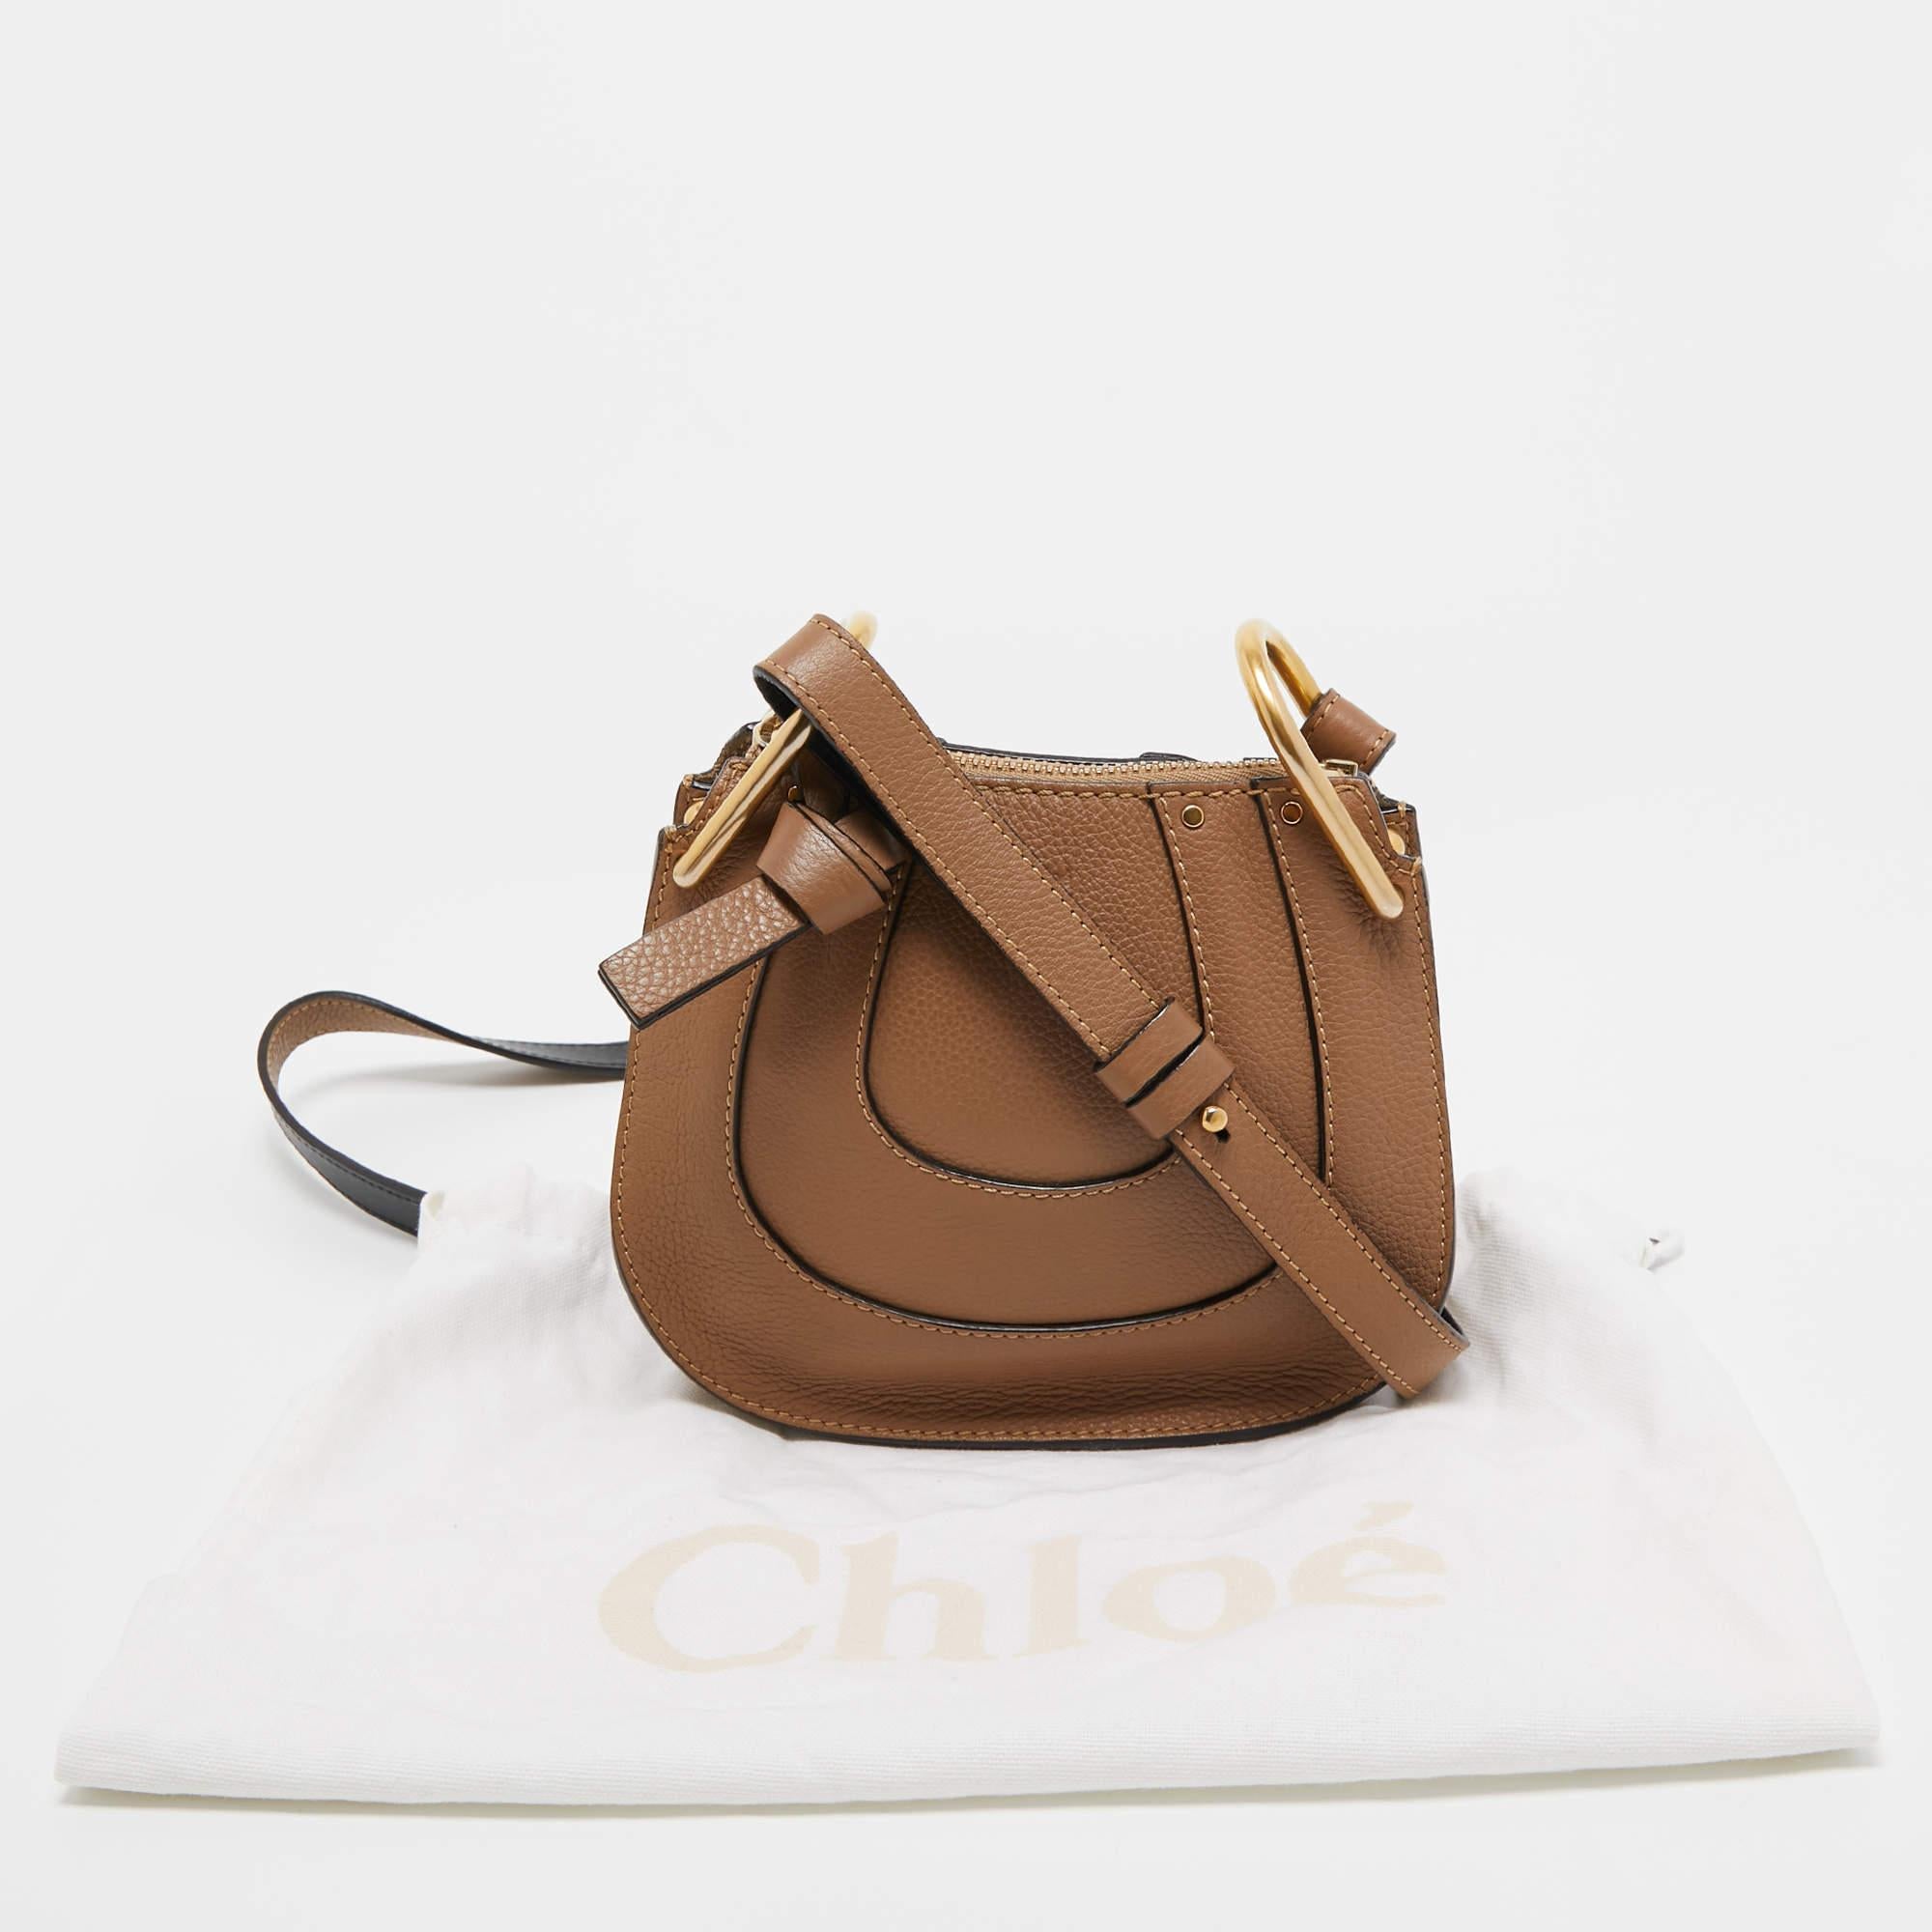 Chloe Brown Leather Nano Hayley Crossbody Bag 9